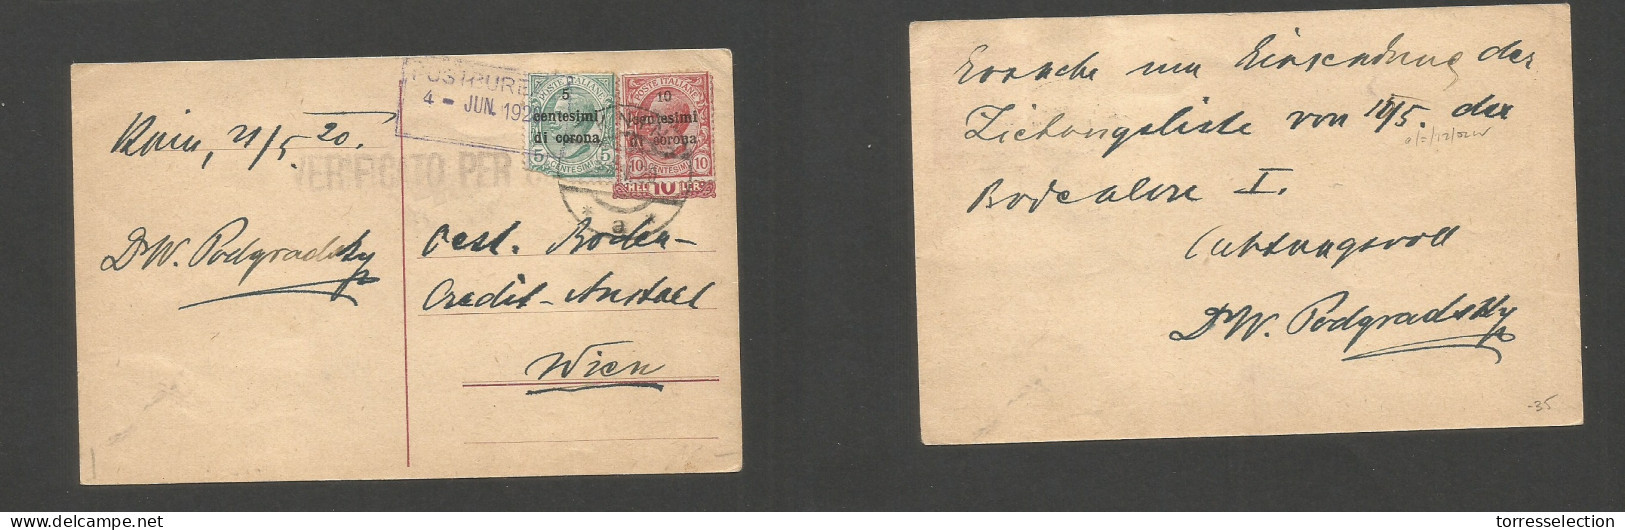 ITALY. 1920 (21 May) Venezia. Ovptd Issue. Knih - Austria, Wien. Censor Multifkd Ppc. Former Austria Stat Card. SALE. - Sin Clasificación